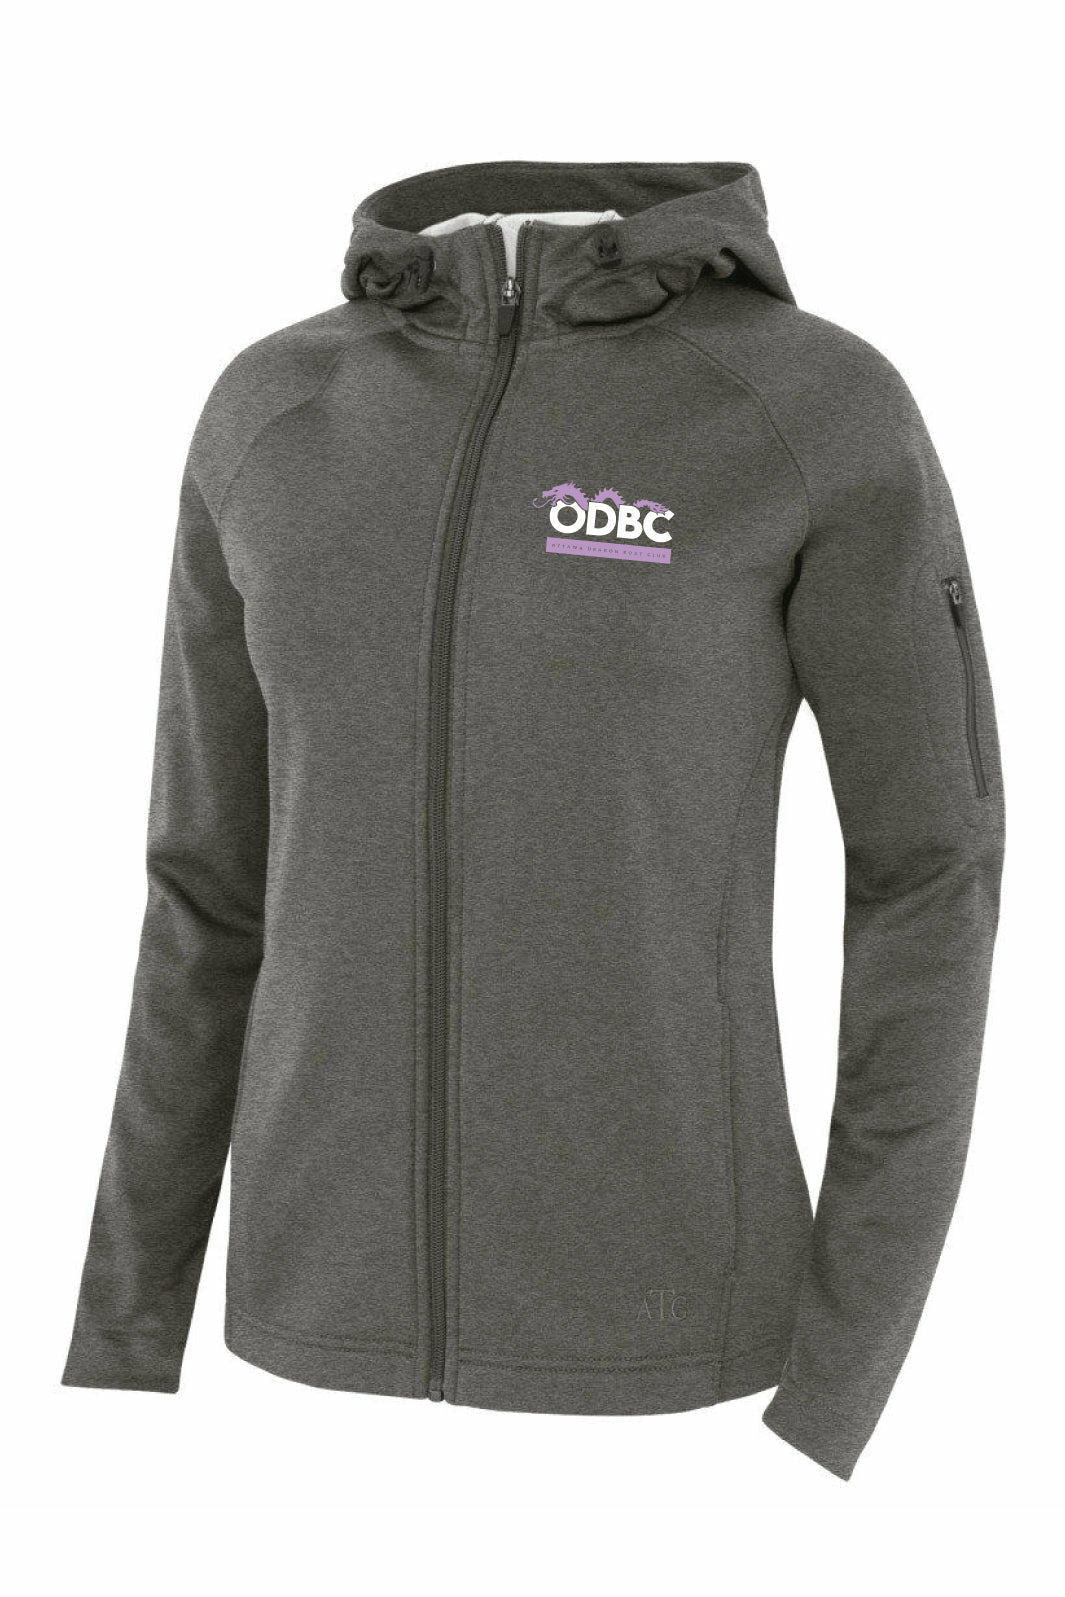 ODBC Women's PTech Fleece Hooded Ladies' Jacket (Dracona) - Oddball Workshop